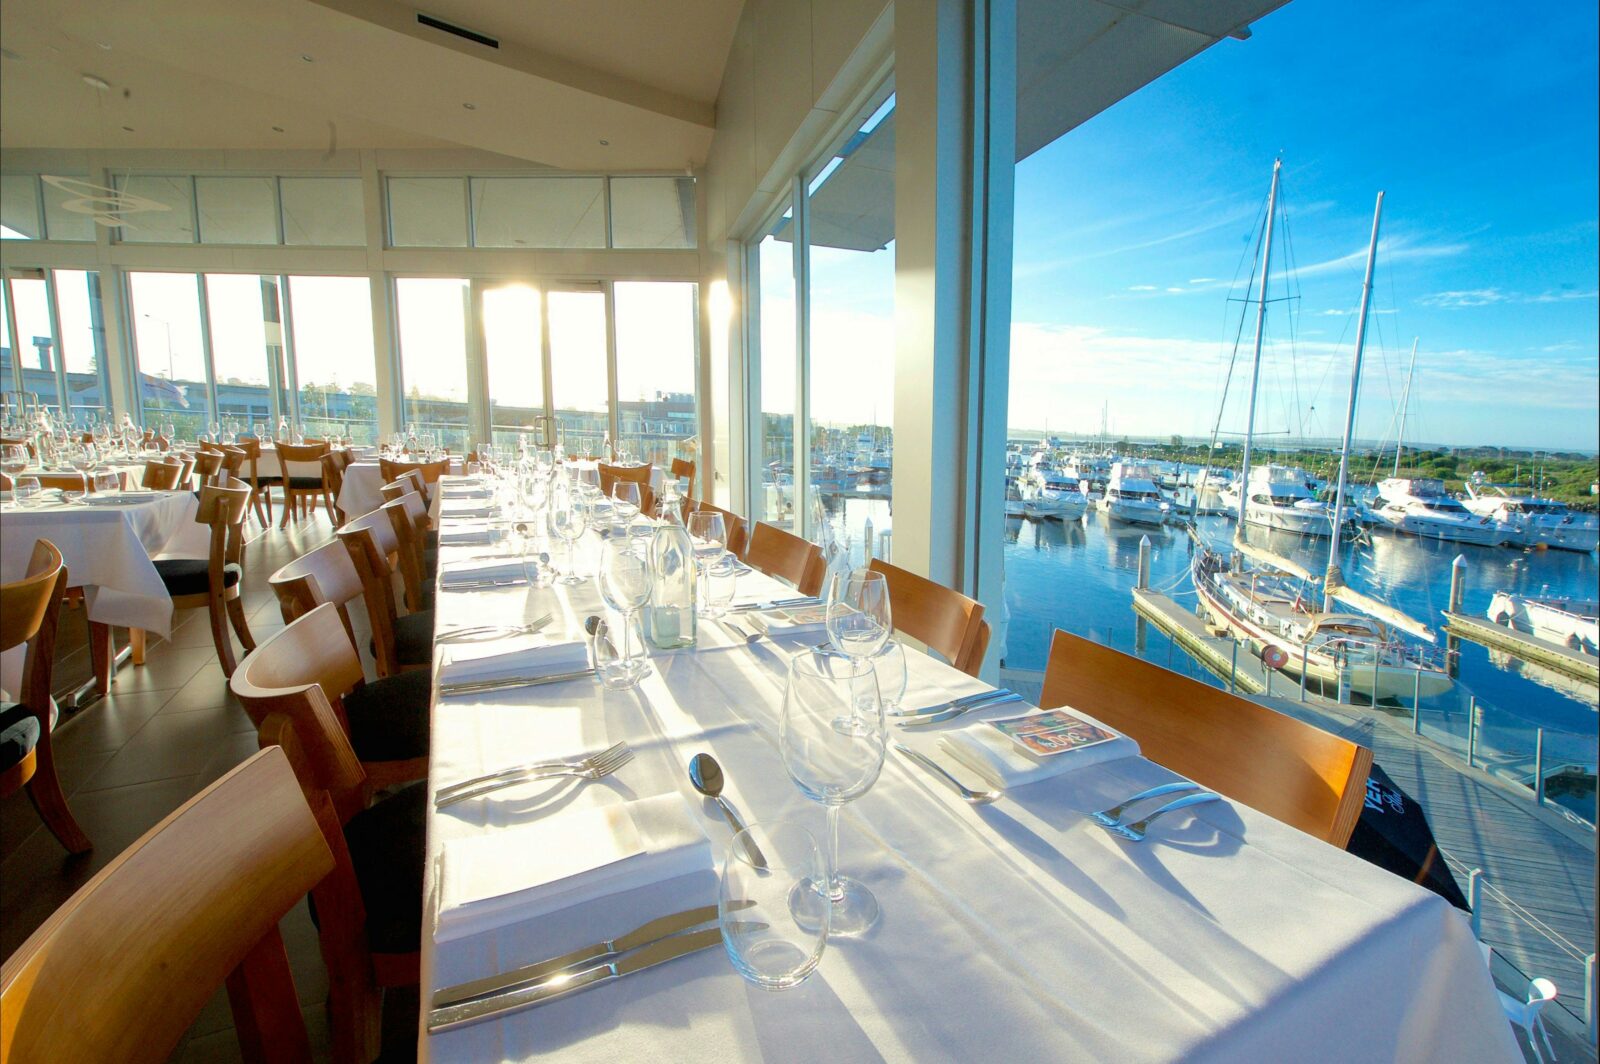 360Q restaurant and wedding functions venue at Queenscliff